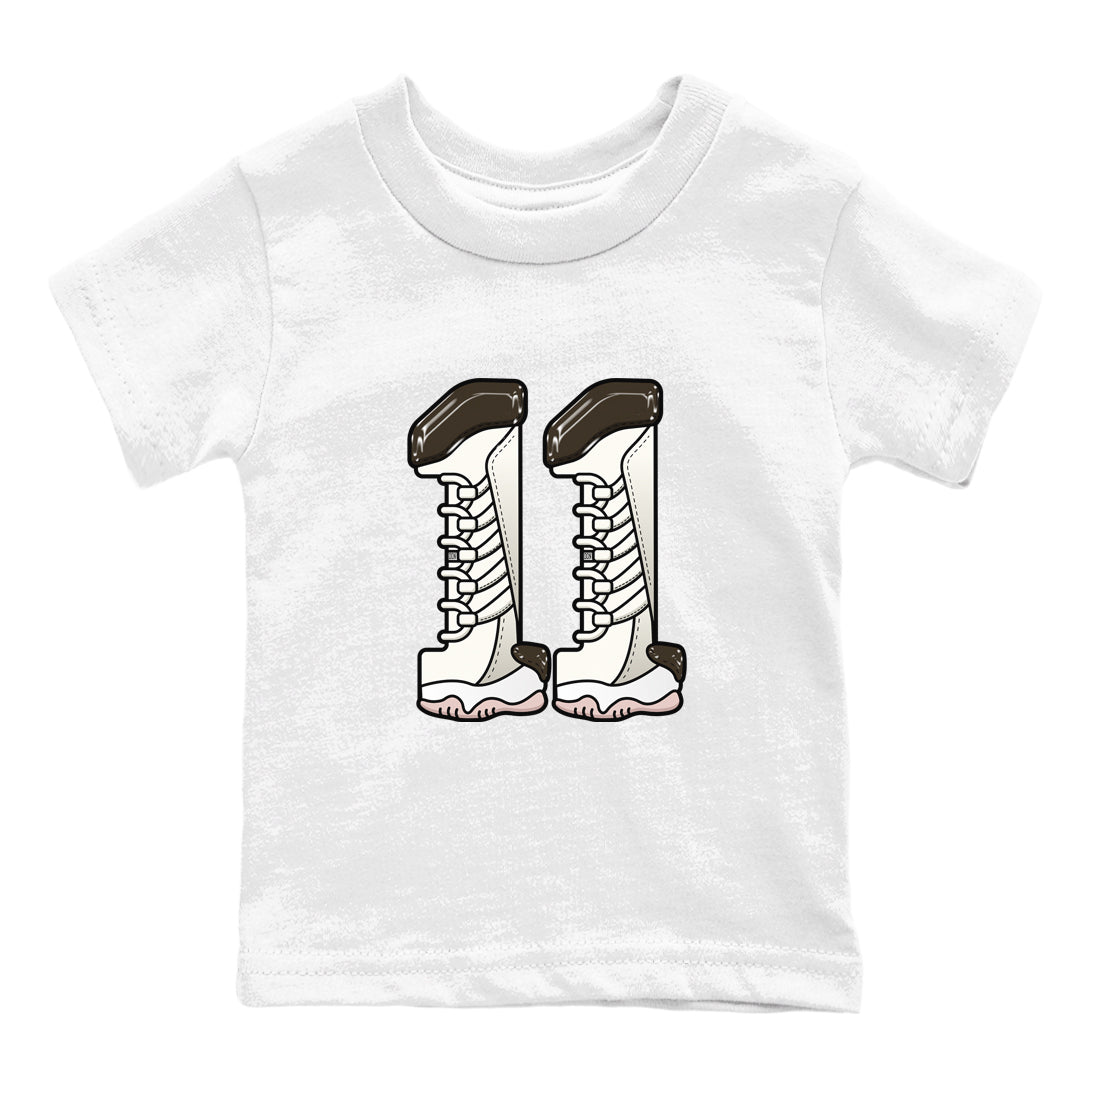 11s Neapolitan shirt to match jordans Number 11 sneaker tees Air Jordan 11 Neapolitan SNRT Sneaker Release Tees Baby Toddler White 2 T-Shirt